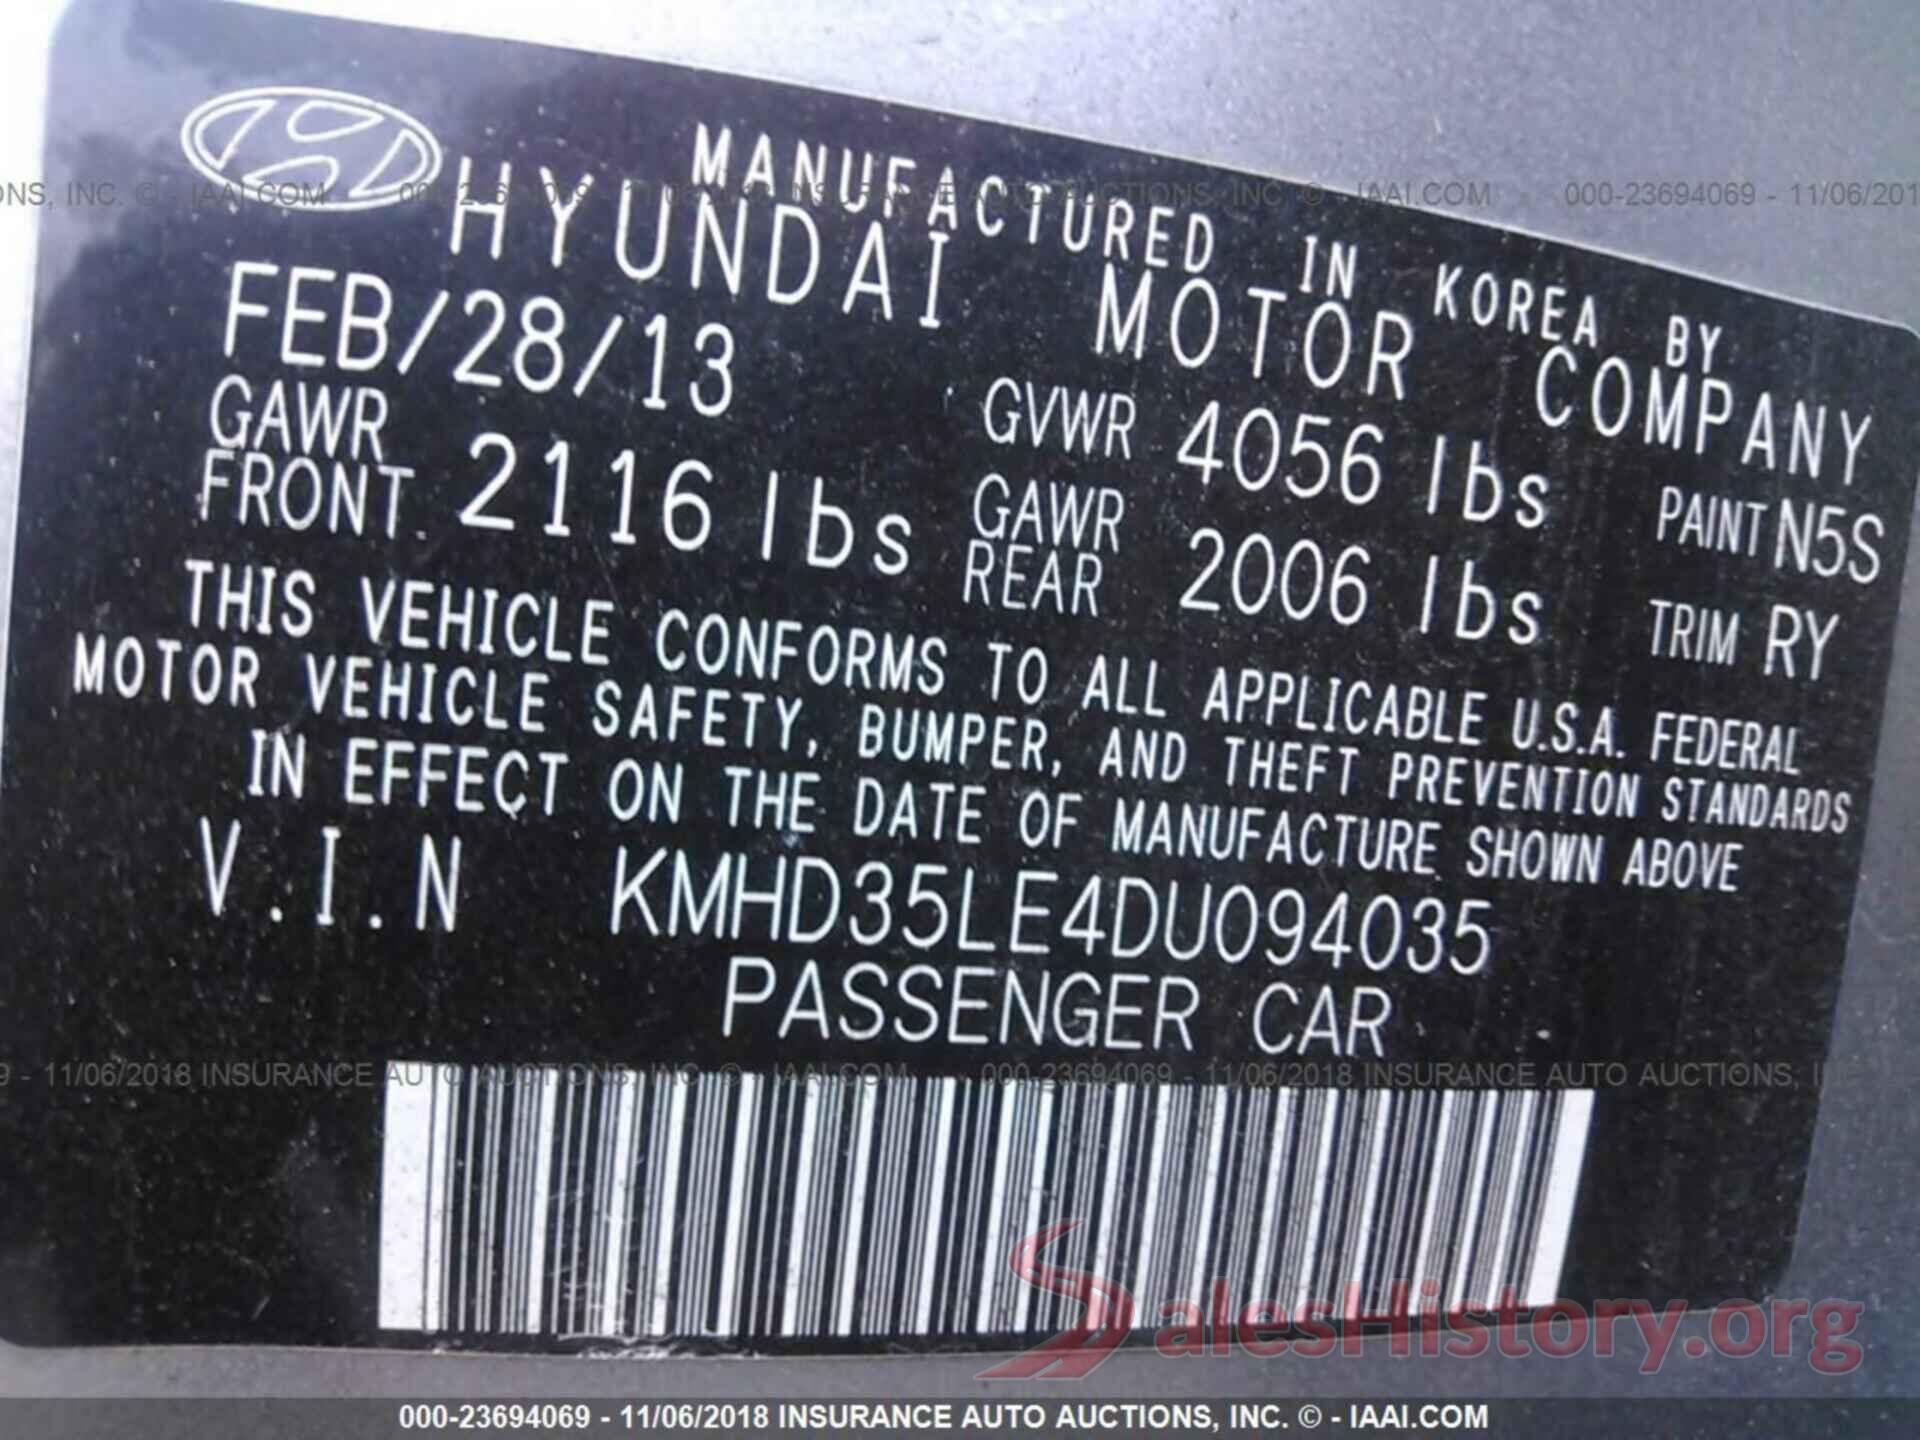 KMHD35LE4DU094035 2013 HYUNDAI ELANTRA GT